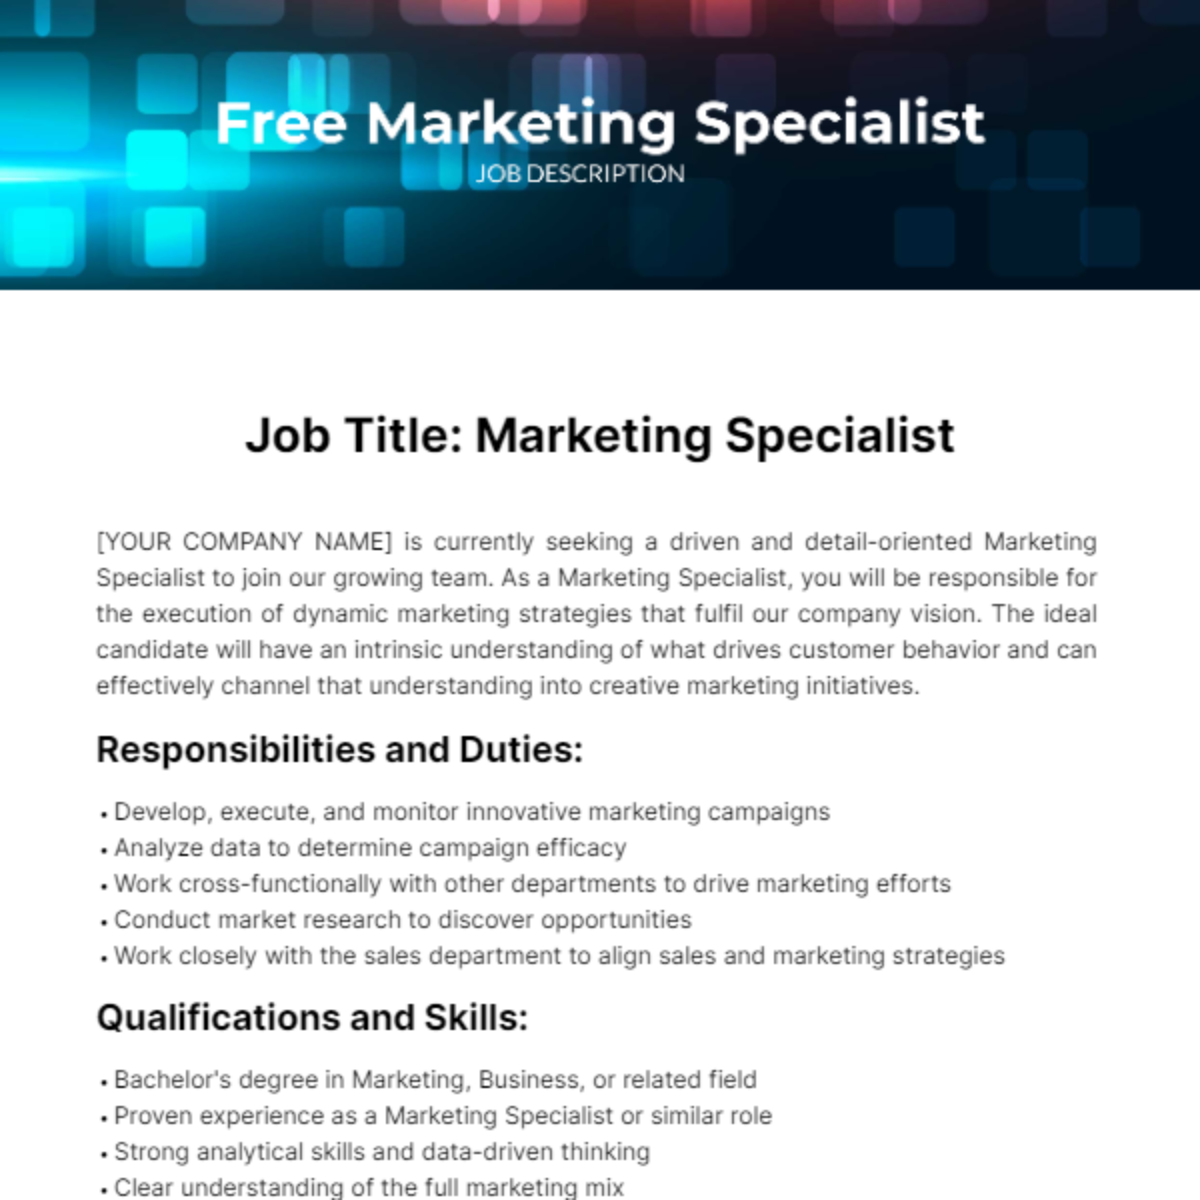 Free Marketing Specialist Job Description Template